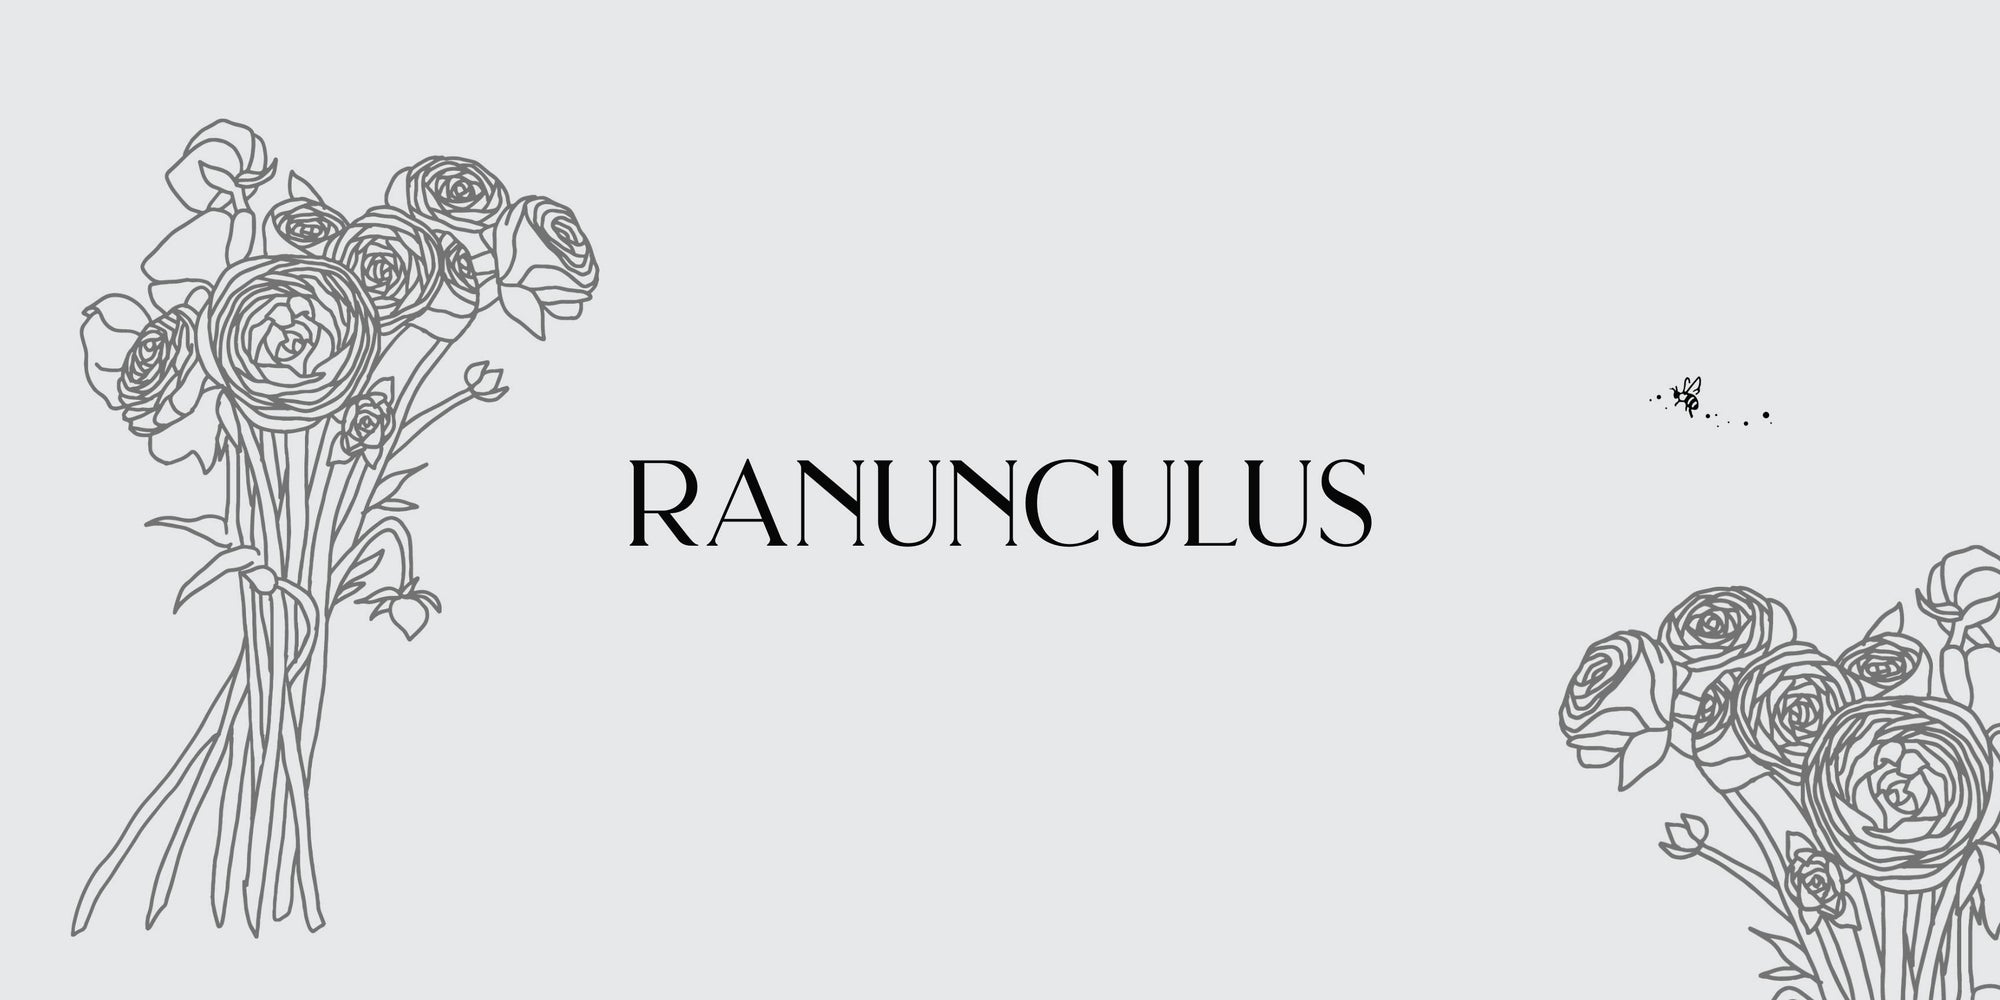 ranunculus corms for sale